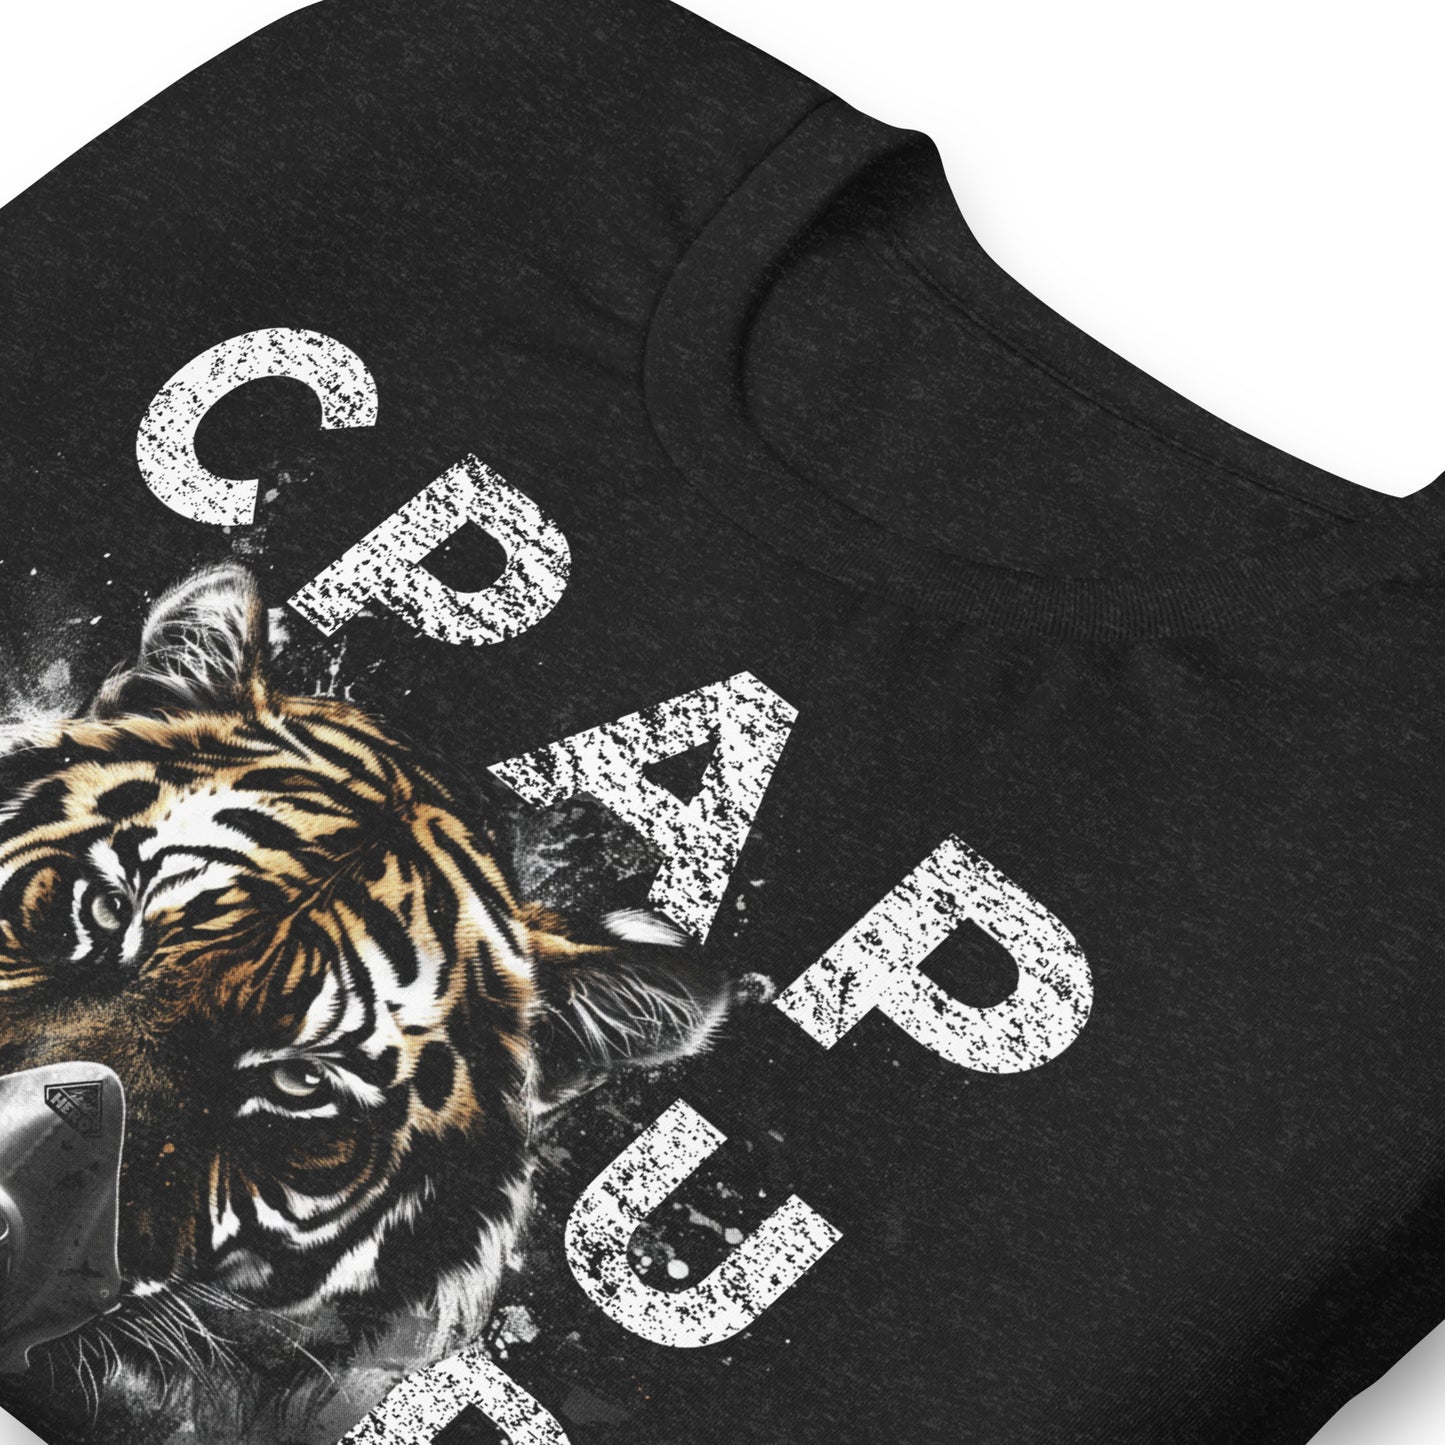 CPAPURR, Tiger wearing CPAP, CPAP, Animals, Sleep Apnea, Graphic Tee Shirt, Black